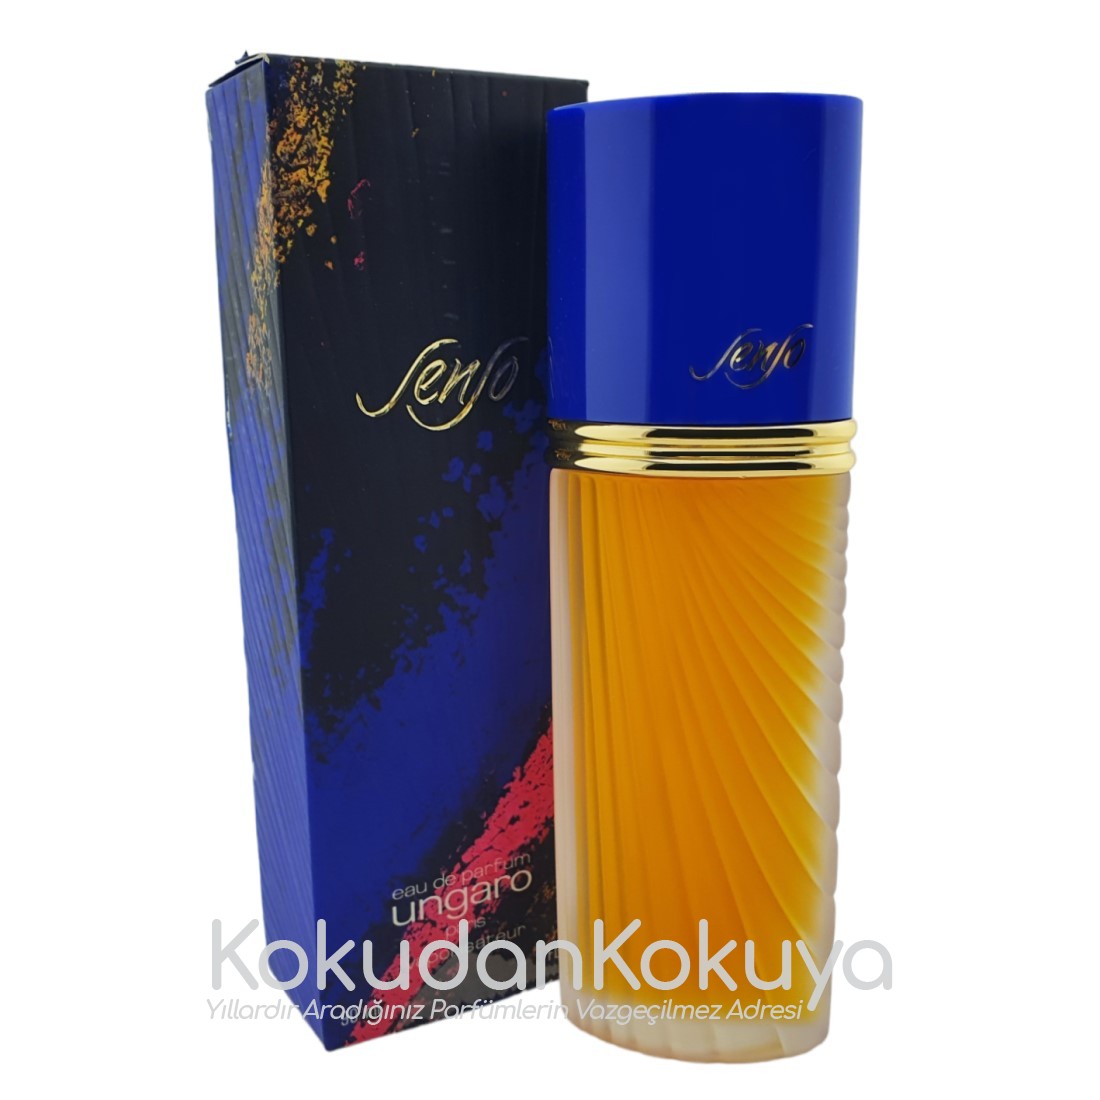 EMANUEL UNGARO Senso (Blue) (Vintage) Parfüm Kadın 90ml Eau De Parfum (EDP) Sprey 